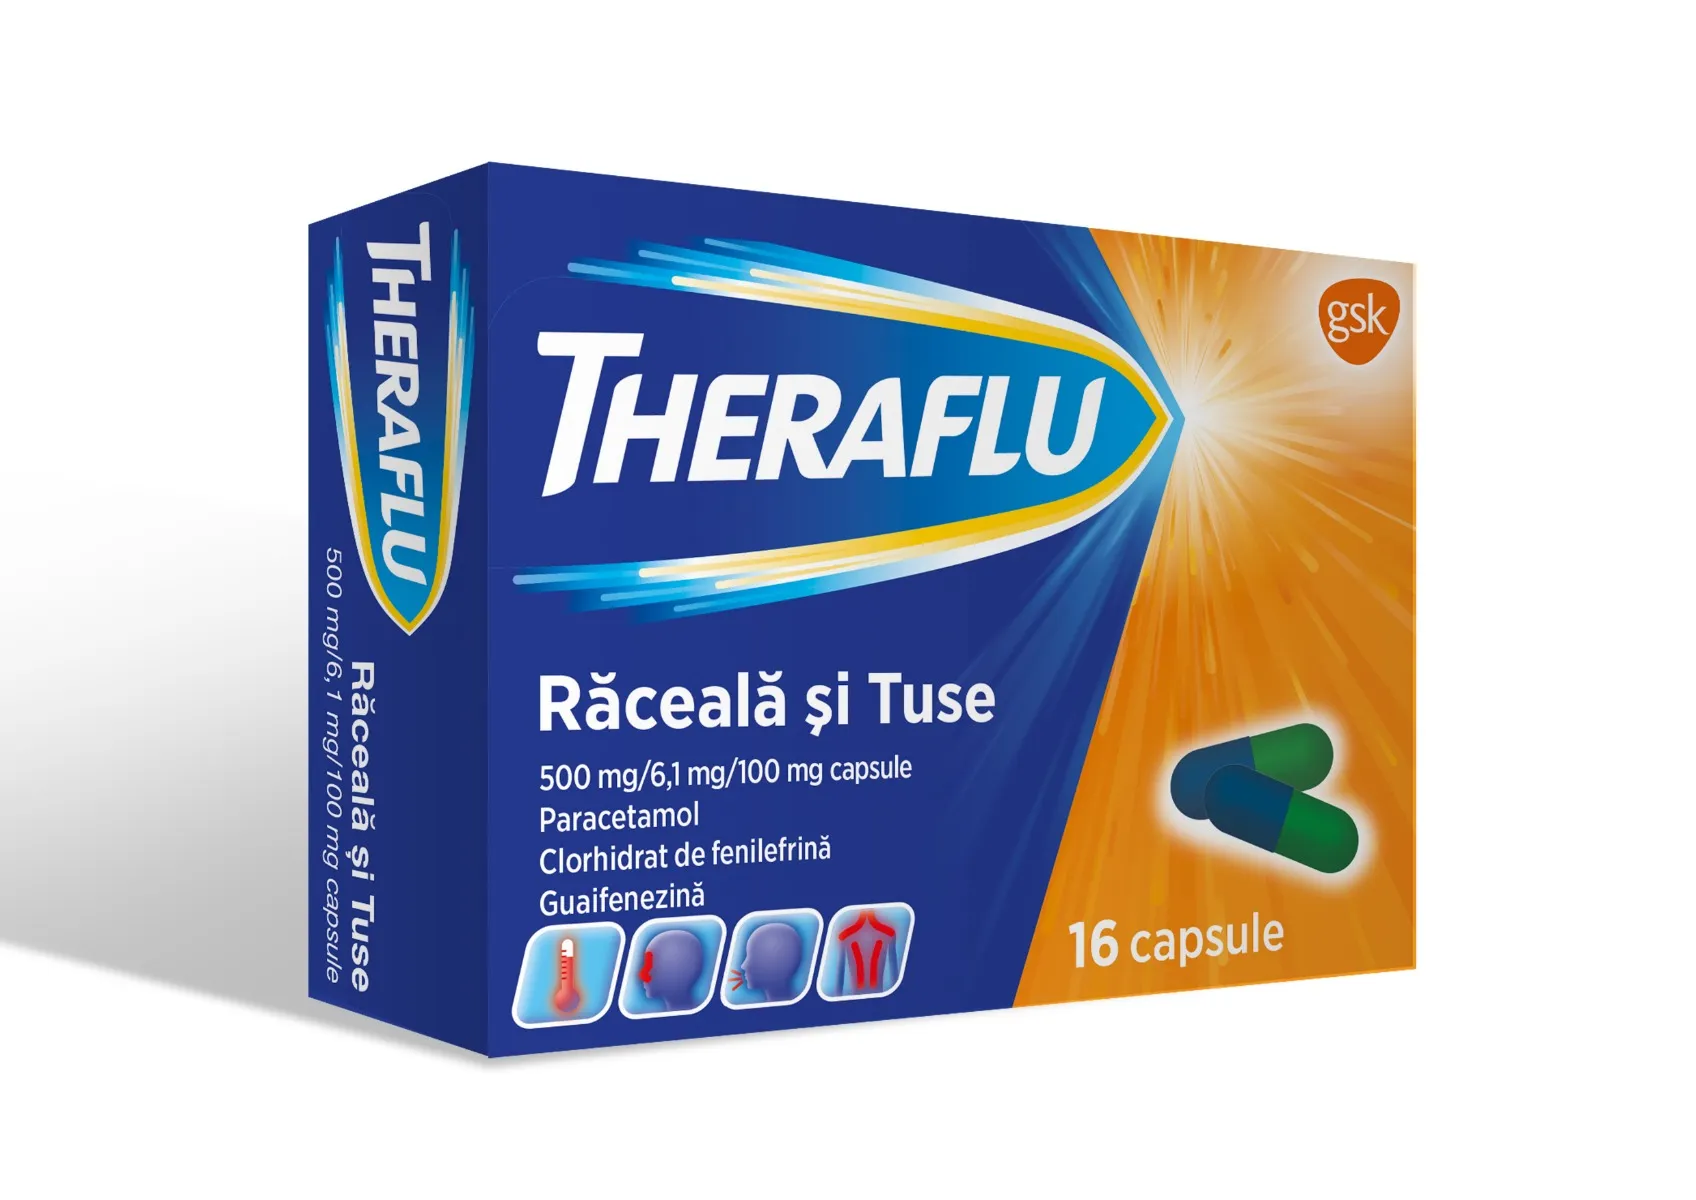 Theraflu Raceala si tuse 500 mg/6,1 mg/100 mg, 16 capsule, GSK 